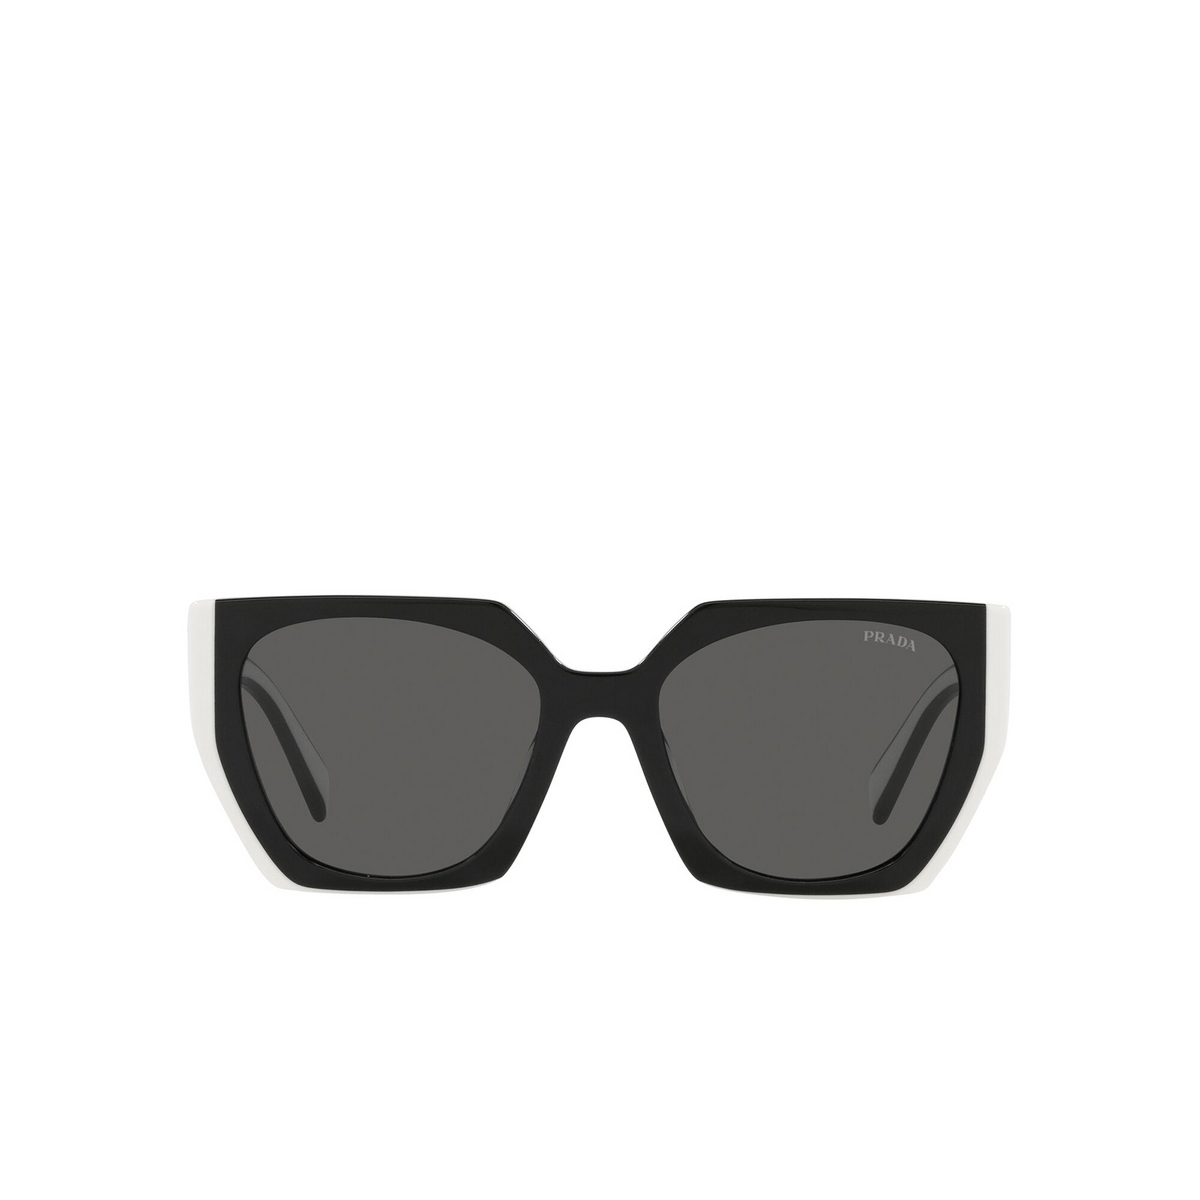 Prada PR 15WS Sunglasses 09Q5S0 Black / Talc - front view